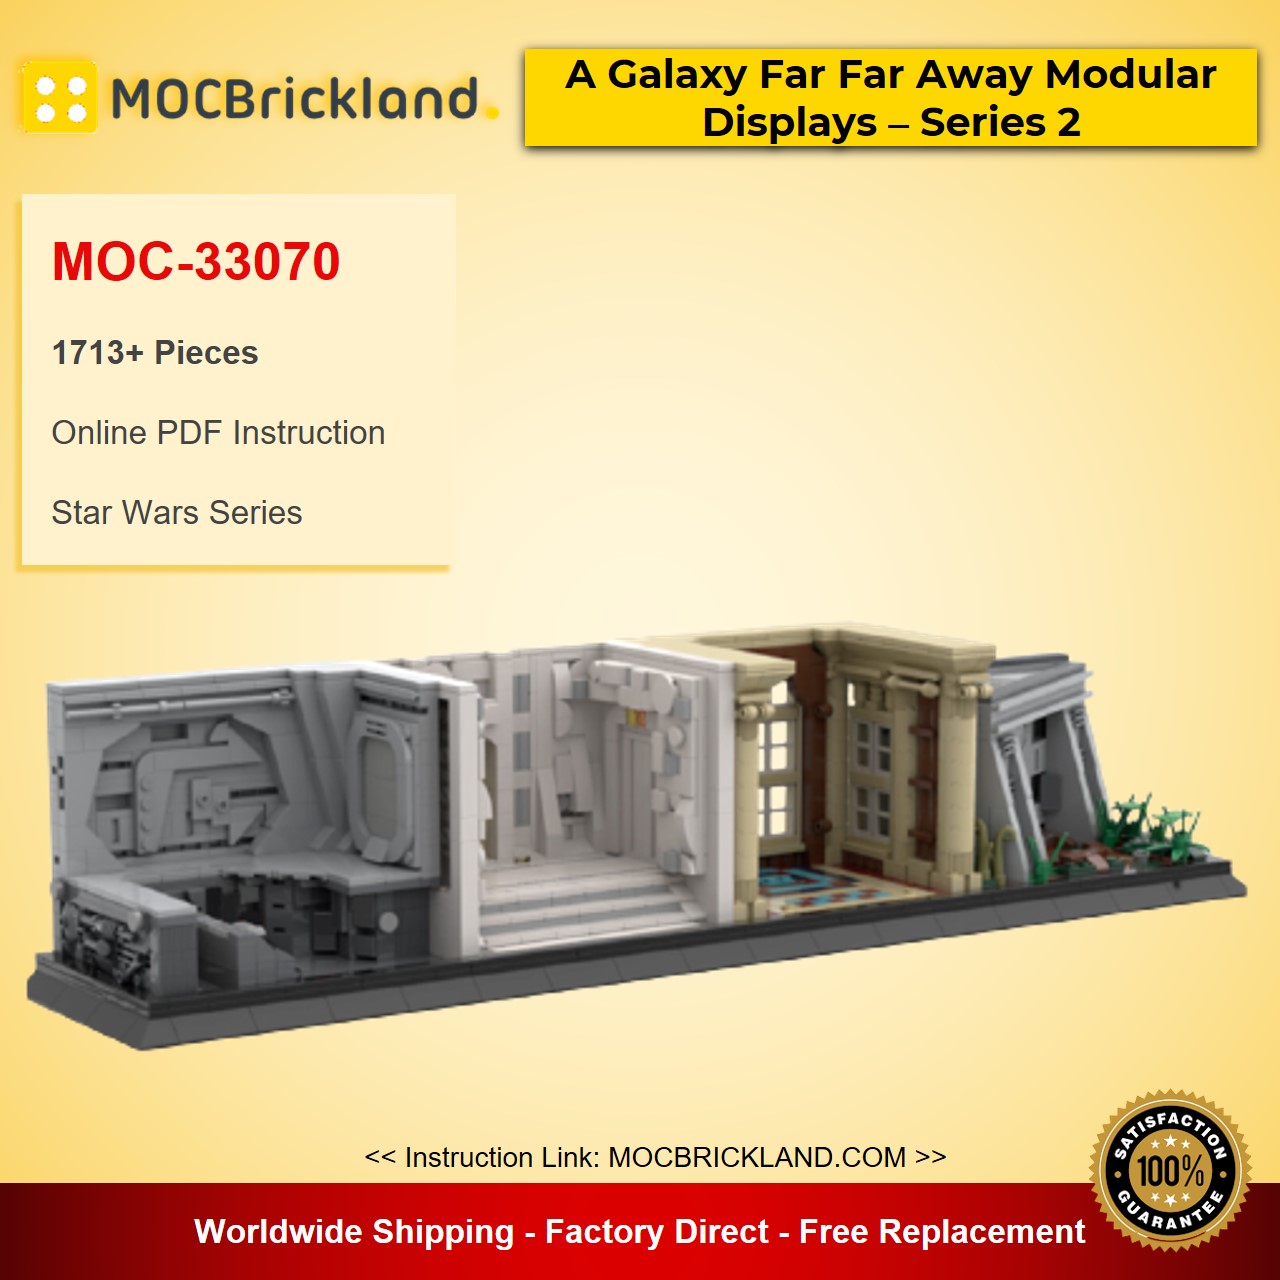 MOCBRICKLAND MOC-33070 A Galaxy Far Far Away Modular Displays – Series 2